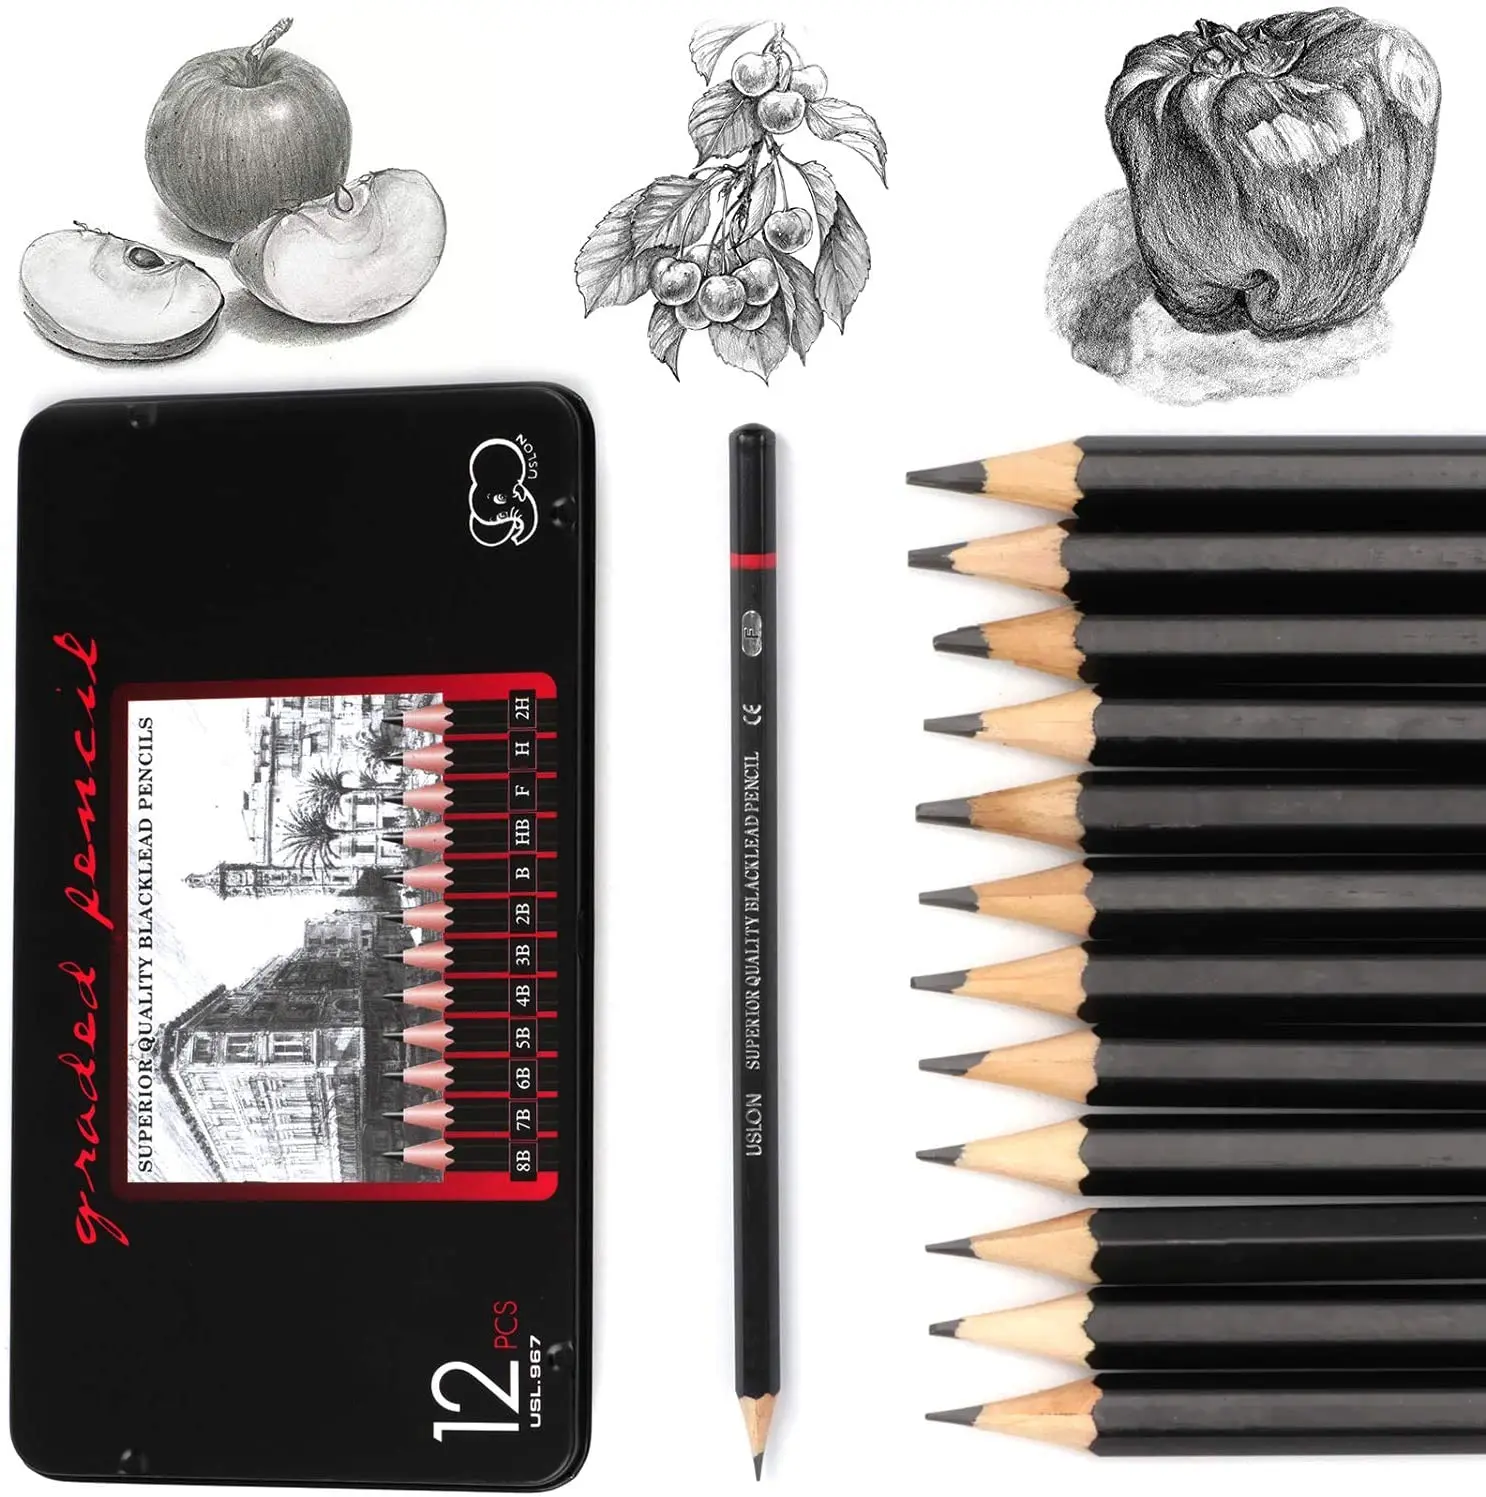 https://ae01.alicdn.com/kf/H8c2d65e19cc94f83a2fcde5edc23f175V/12Pcs-Sketching-Pencils-Professional-Sketch-Pencil-Set-with-Pencil-Case-Graphite-Art-Pencils-8B-7B-6B.jpg